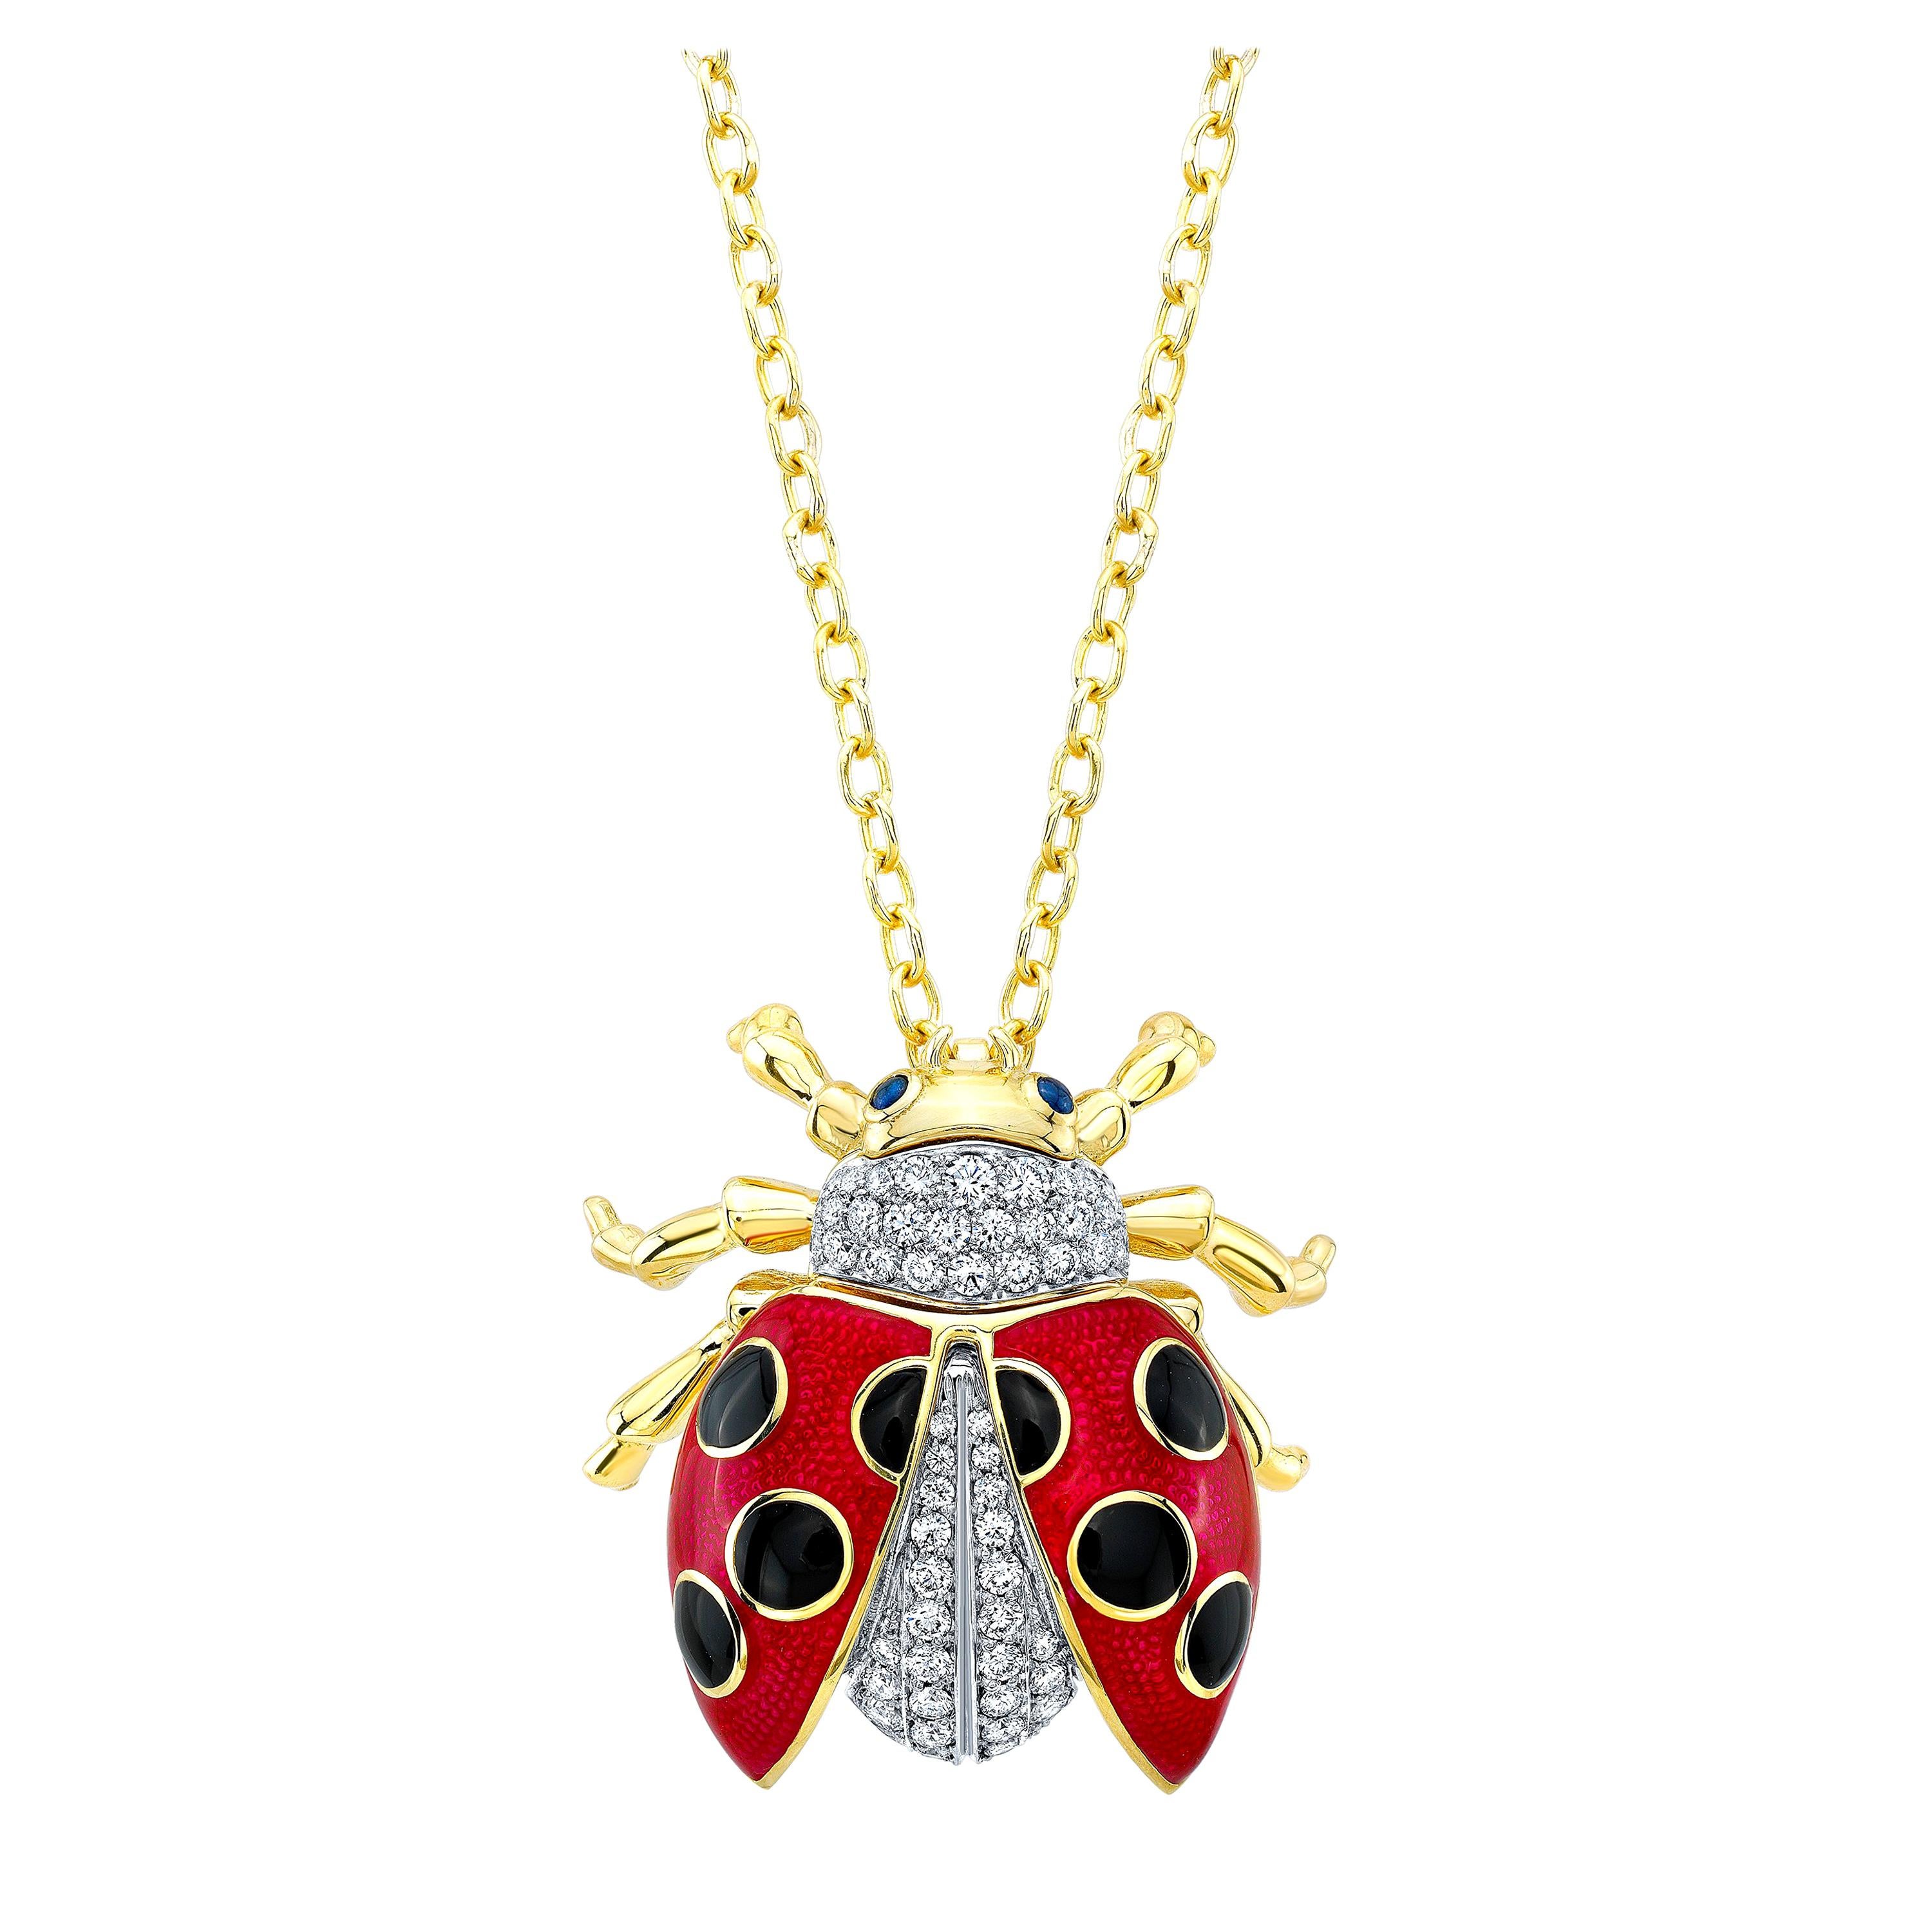 18 Karat Gold, Diamond, Sapphire and Enamel Ladybug Pendant Necklace 'Riley'